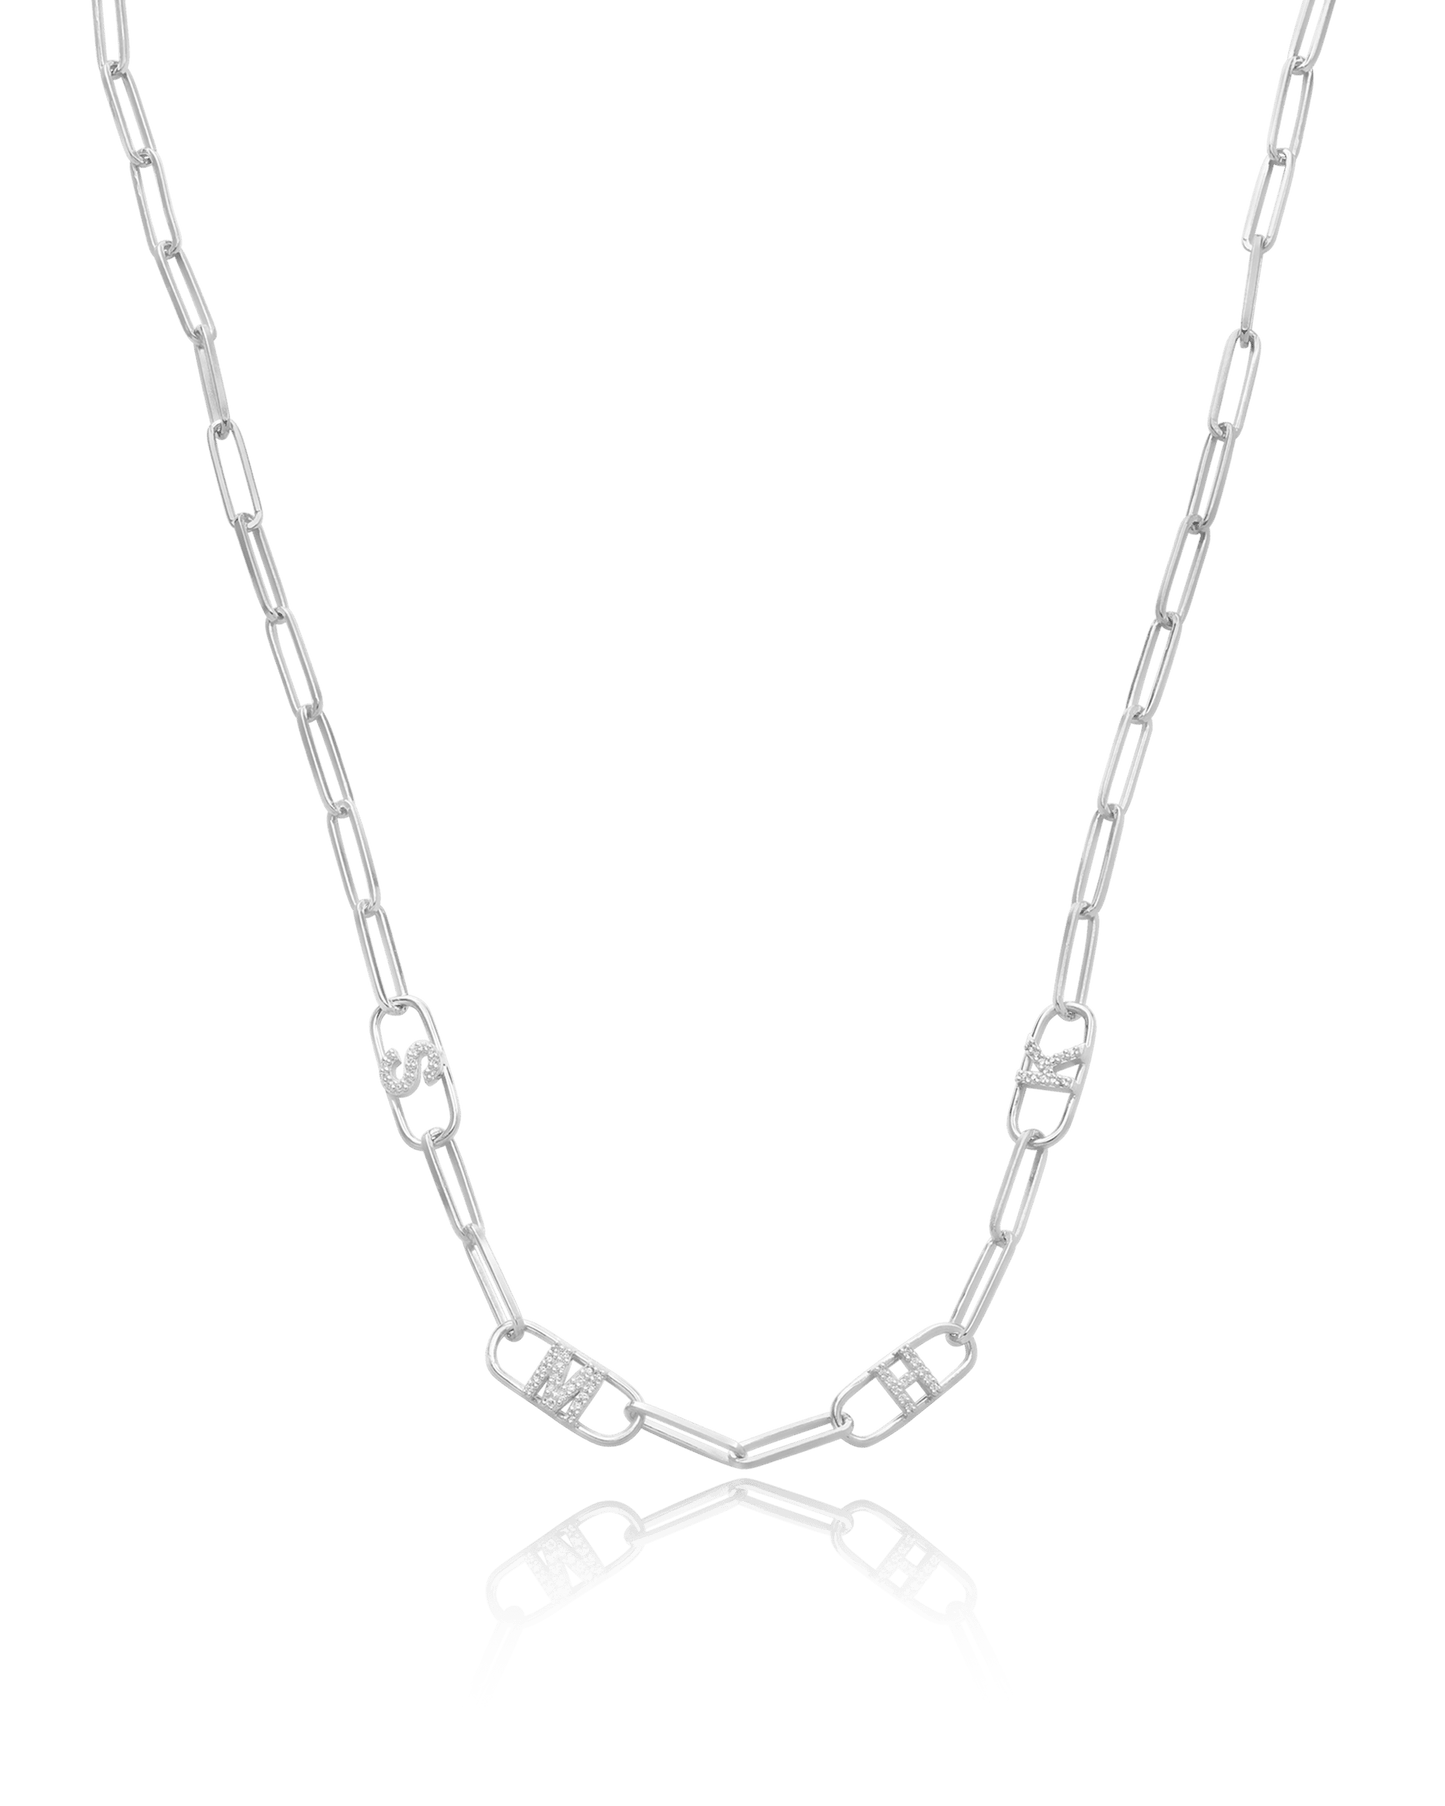 Initials Link Necklace - 18K Gold Vermeil Necklaces magal-dev 